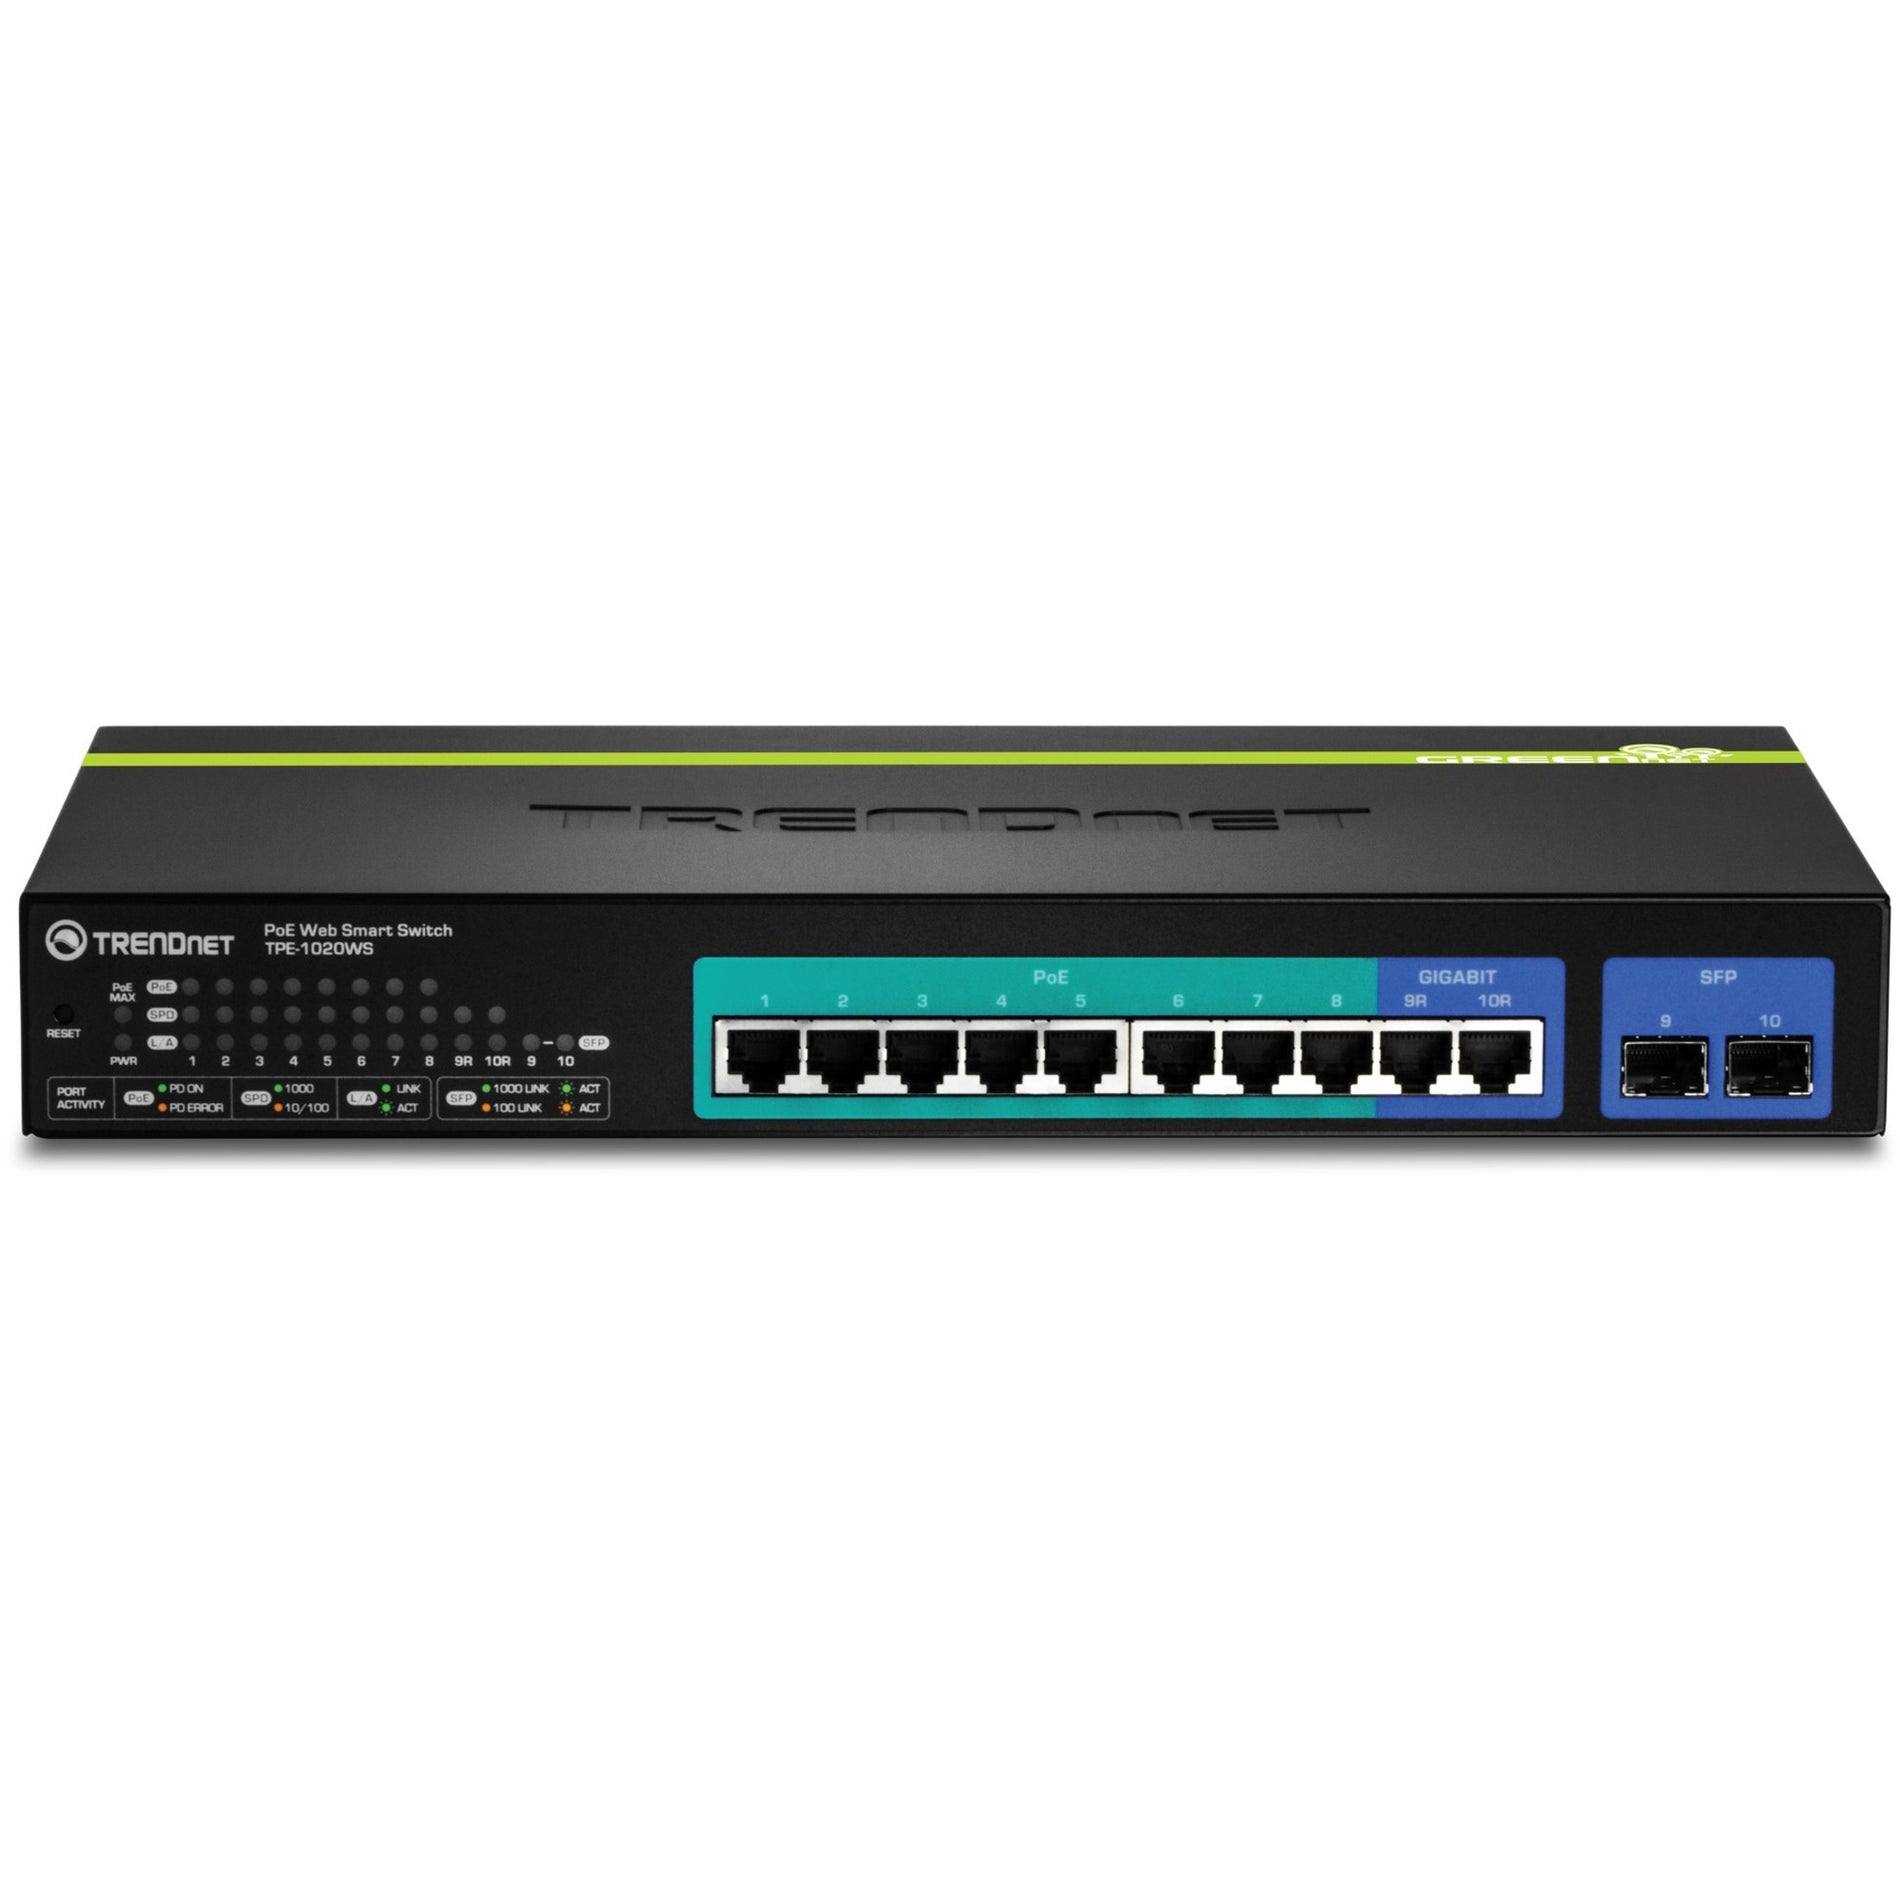 TRENDnet TPE-1020WS 10-Port Gigabit Web Smart PoE+ Switch, 8 x PoE+ Gigabit Ports, 2 x Gigabit Ethernet Ports, 2 x Shared SFP Slots, 75W Total Power Budget, Rack Mountable